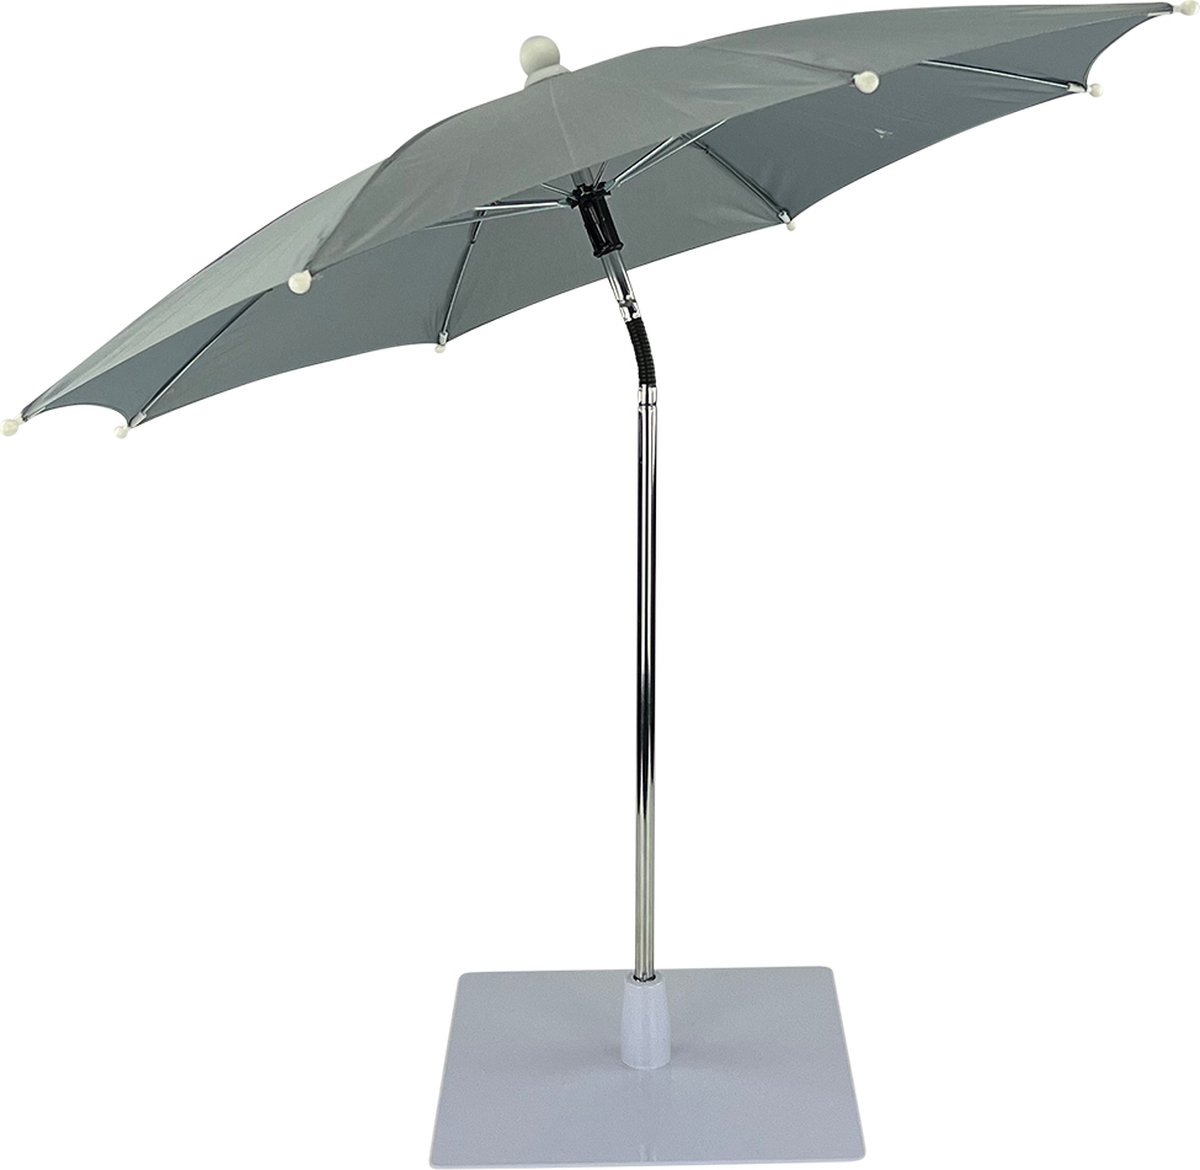 Tafelparasol Grijs van WDMT - ø 60 x 56 cm - mini parasol balkon - strandparasol - parasol met voet - zweefparasol - parasols - schaduwdoek - verzwaarde parasolvoet - Grijs